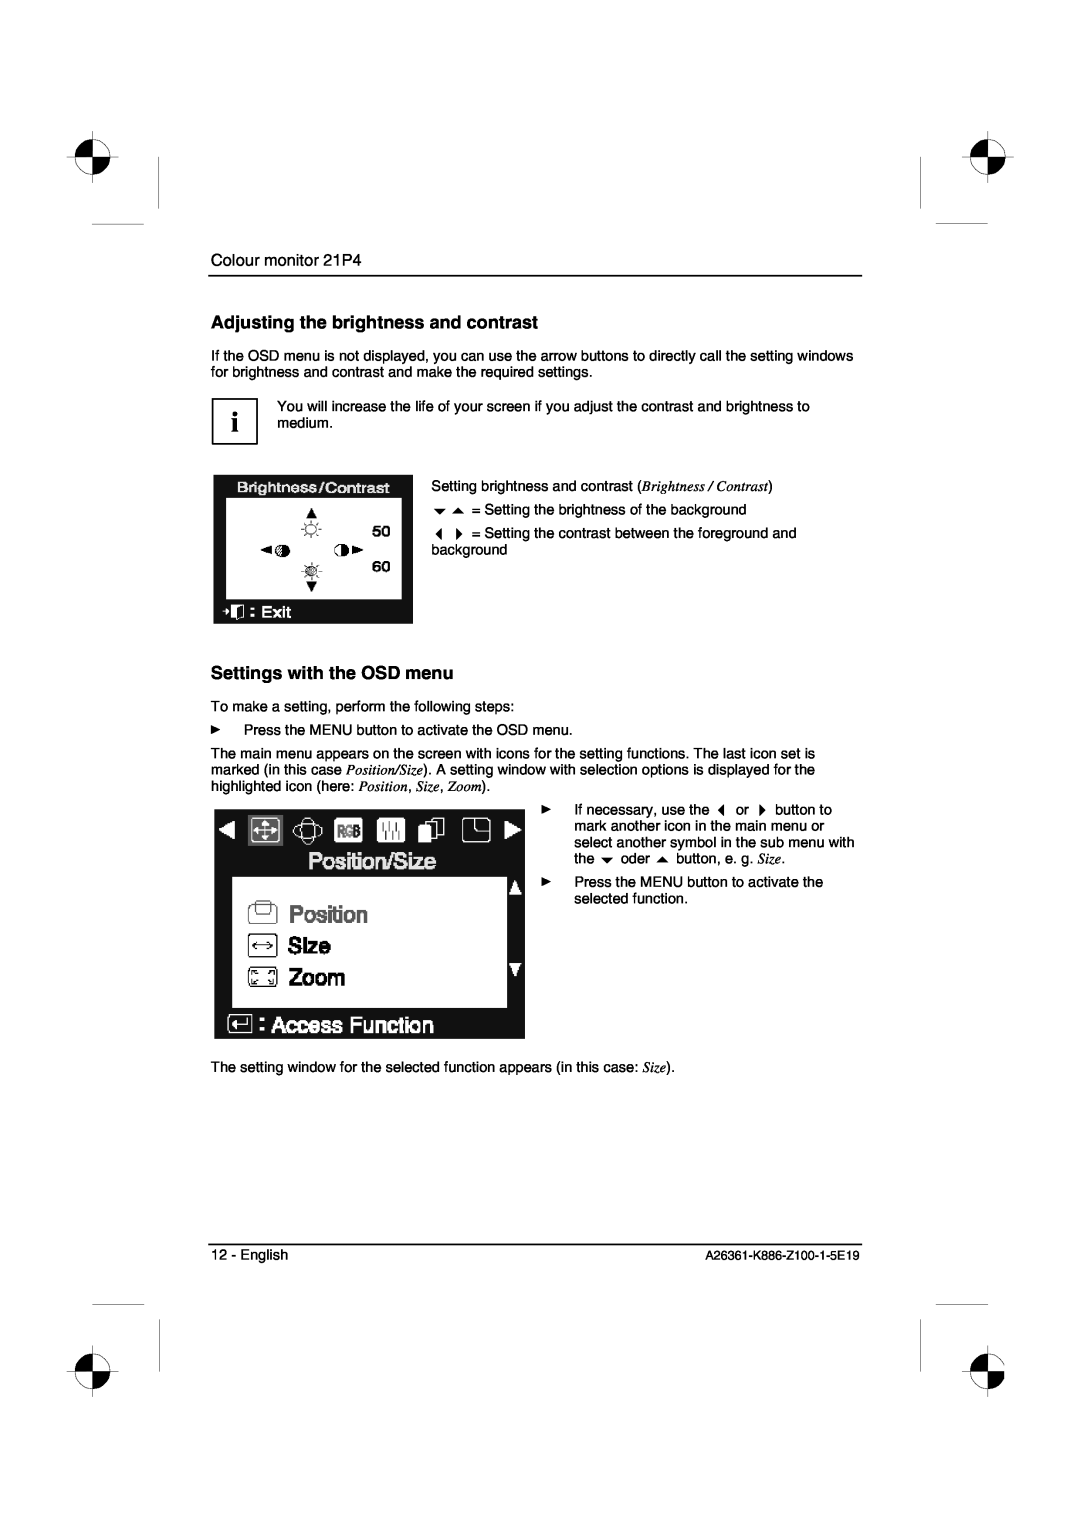 Fujitsu Siemens Computers manual Adjusting the brightness and contrast, Settings with the OSD menu, Colour monitor 21P4 